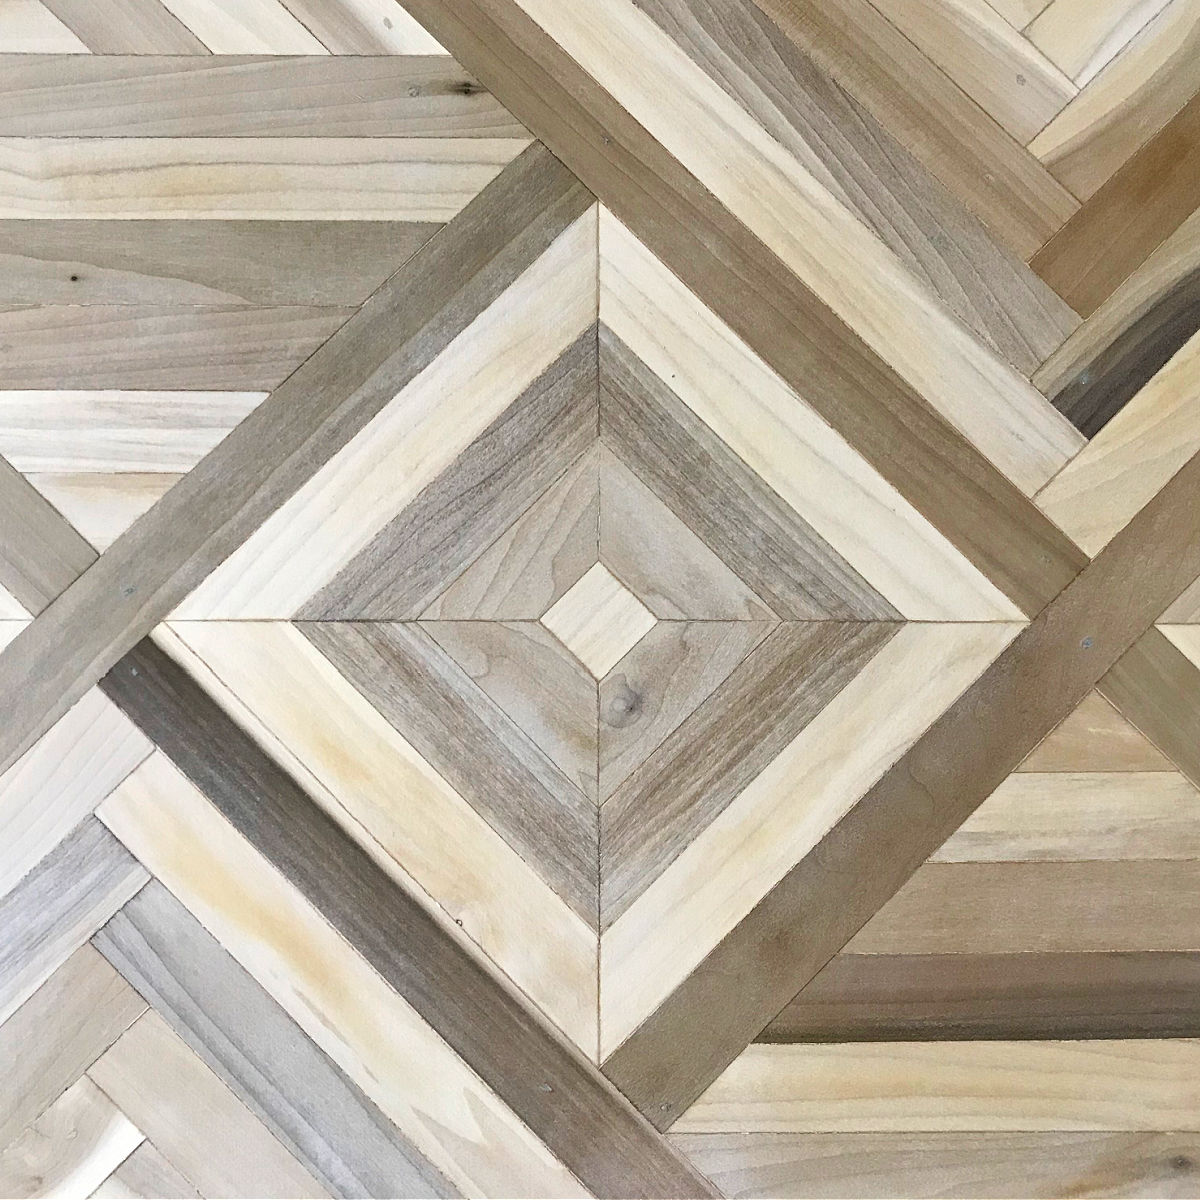 Beautiful DIY Geometric Wood Table Top Design: Steps and Video